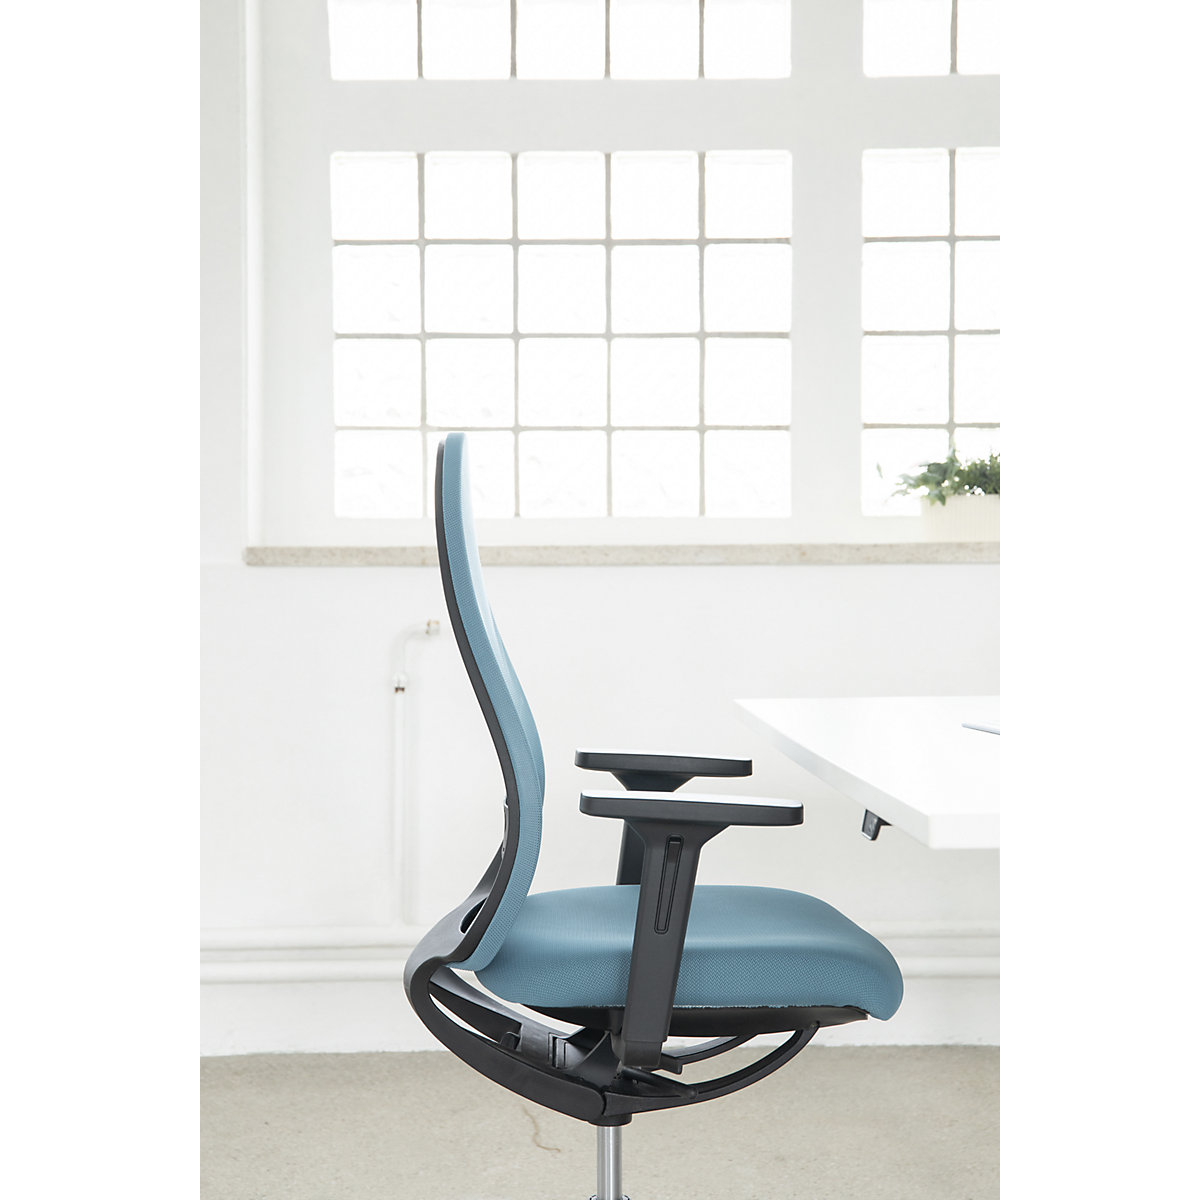 SOFT SITNESS ART office swivel chair – Topstar (Product illustration 16)-15